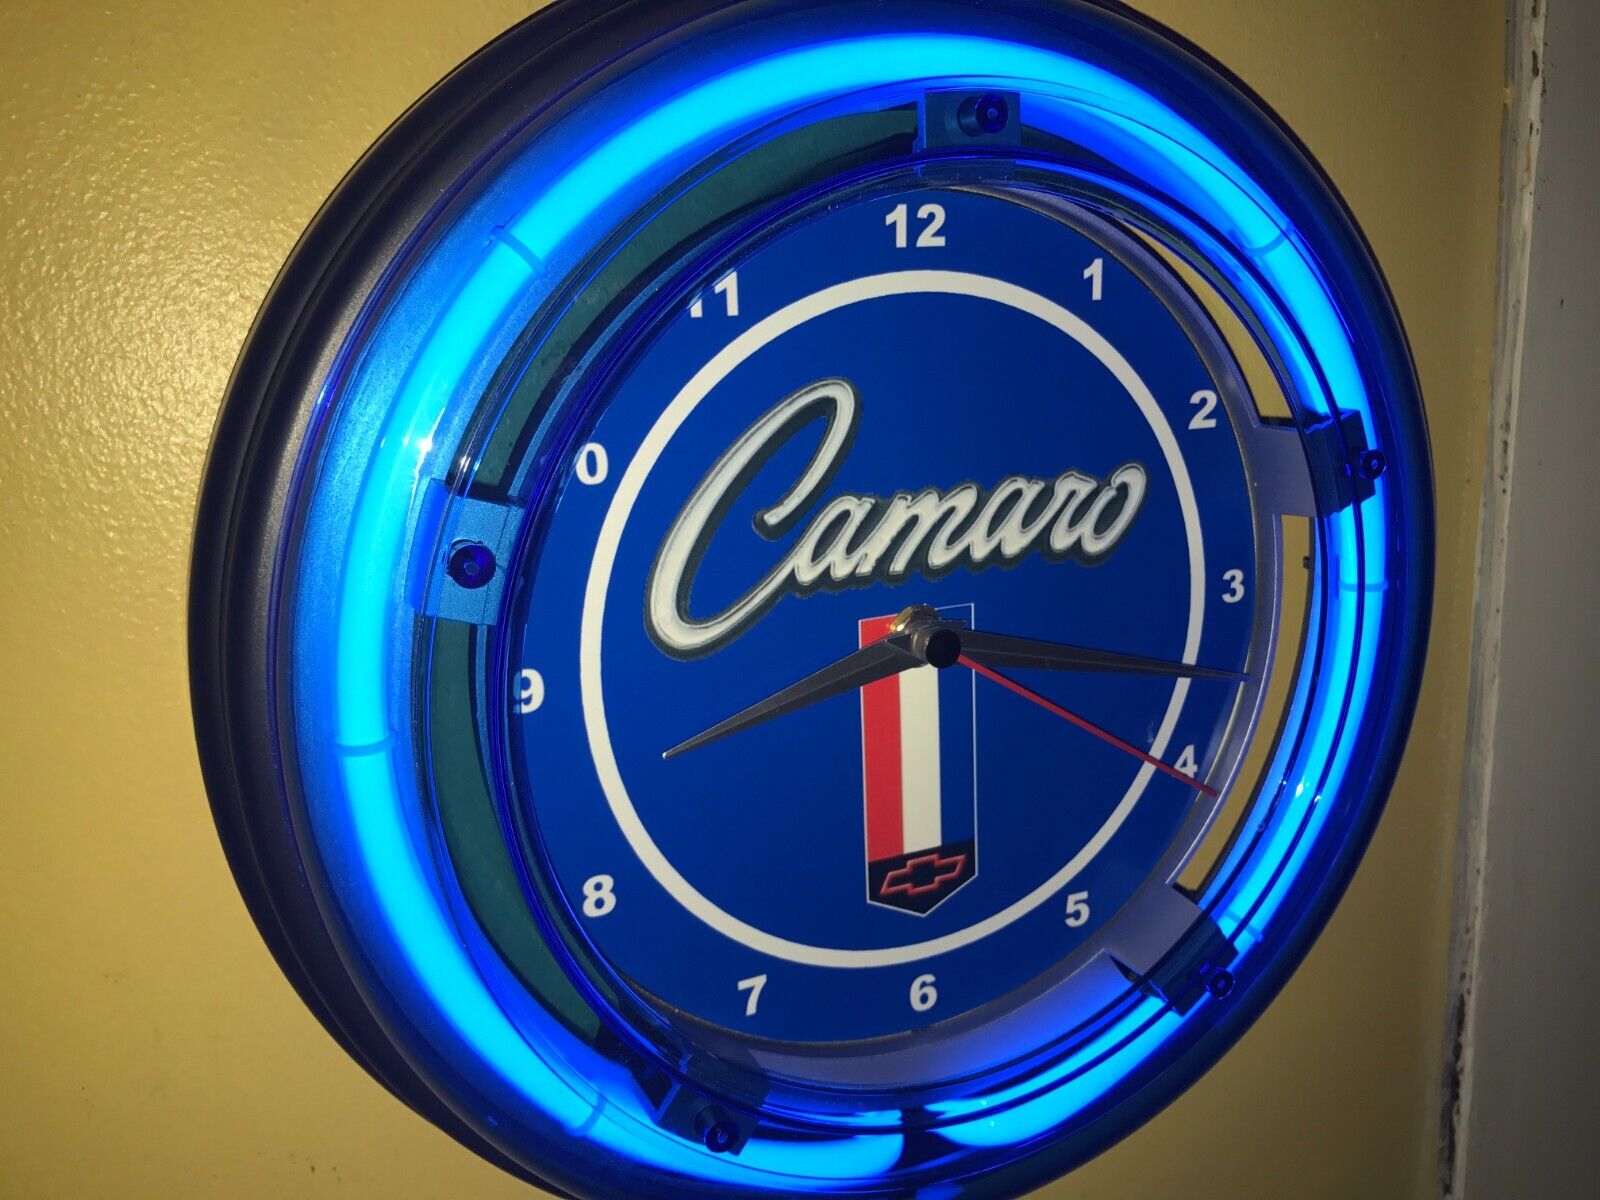 Chevy Camaro Motors Auto Garage Man Cave Neon Advertising Wall Clock Sign